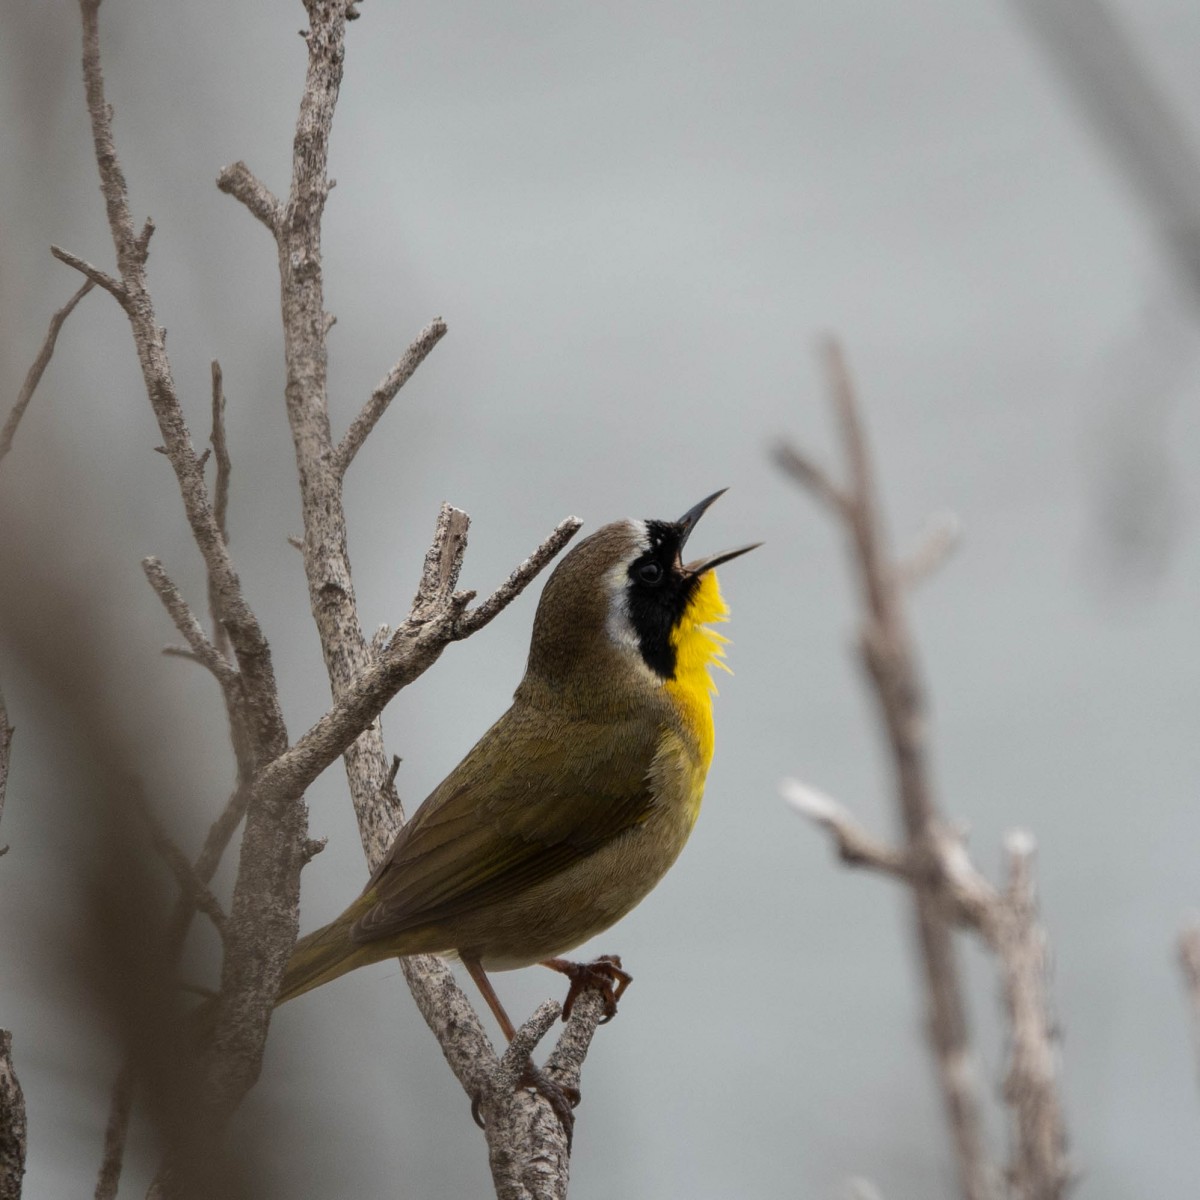 Common Yellowthroat singing